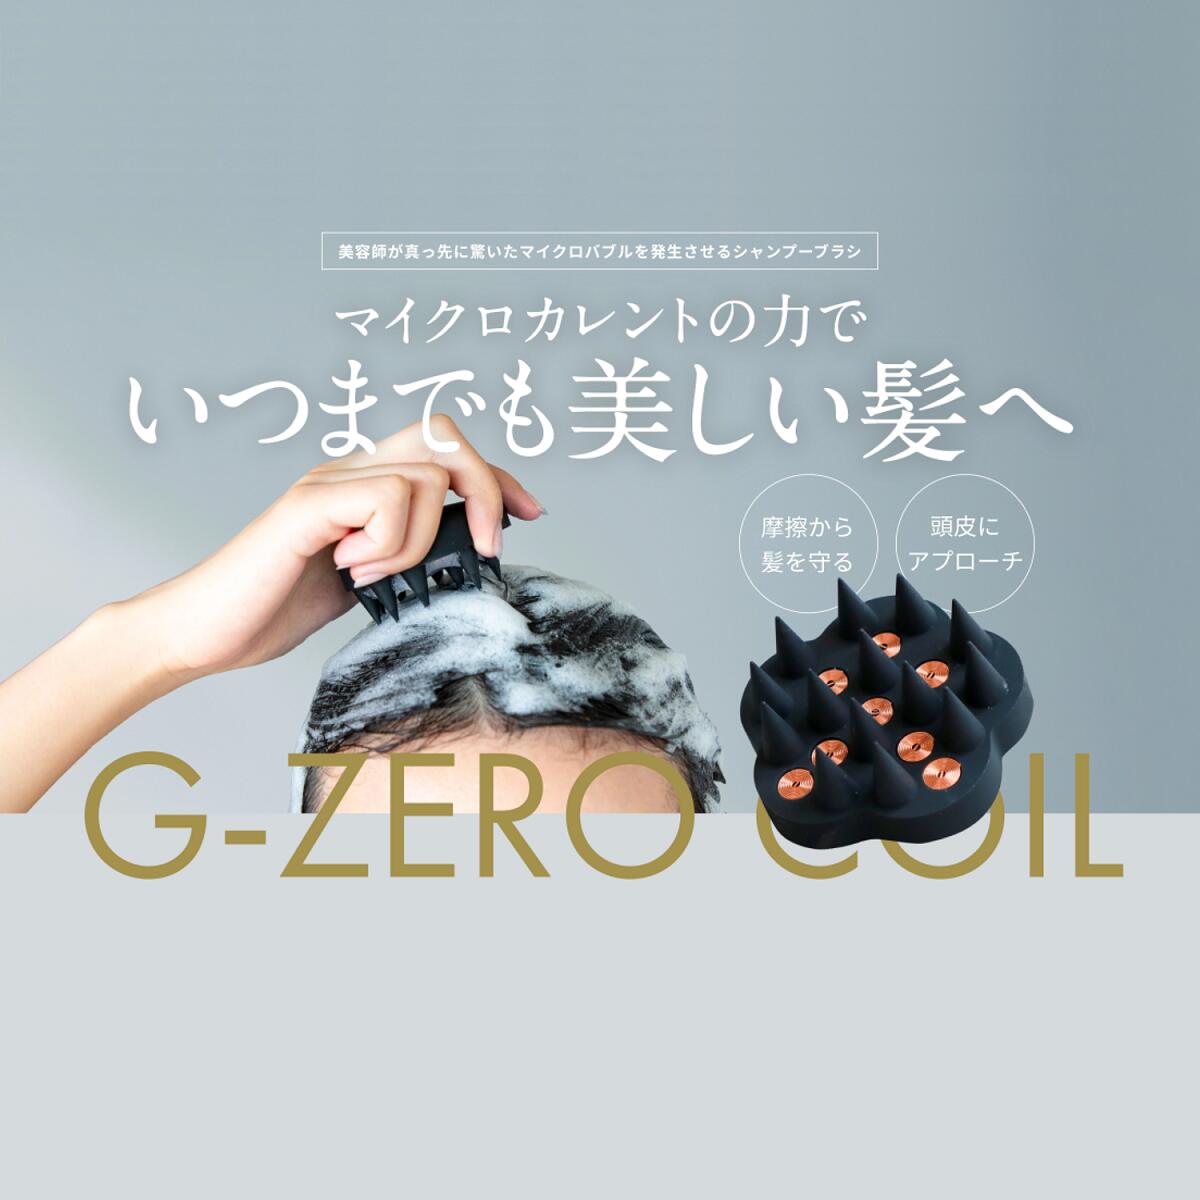 GEMMATSU G-ZEROCOIL ジーゼロコイル マイクロカレント プロ シャンプーブラシ GHA-G01